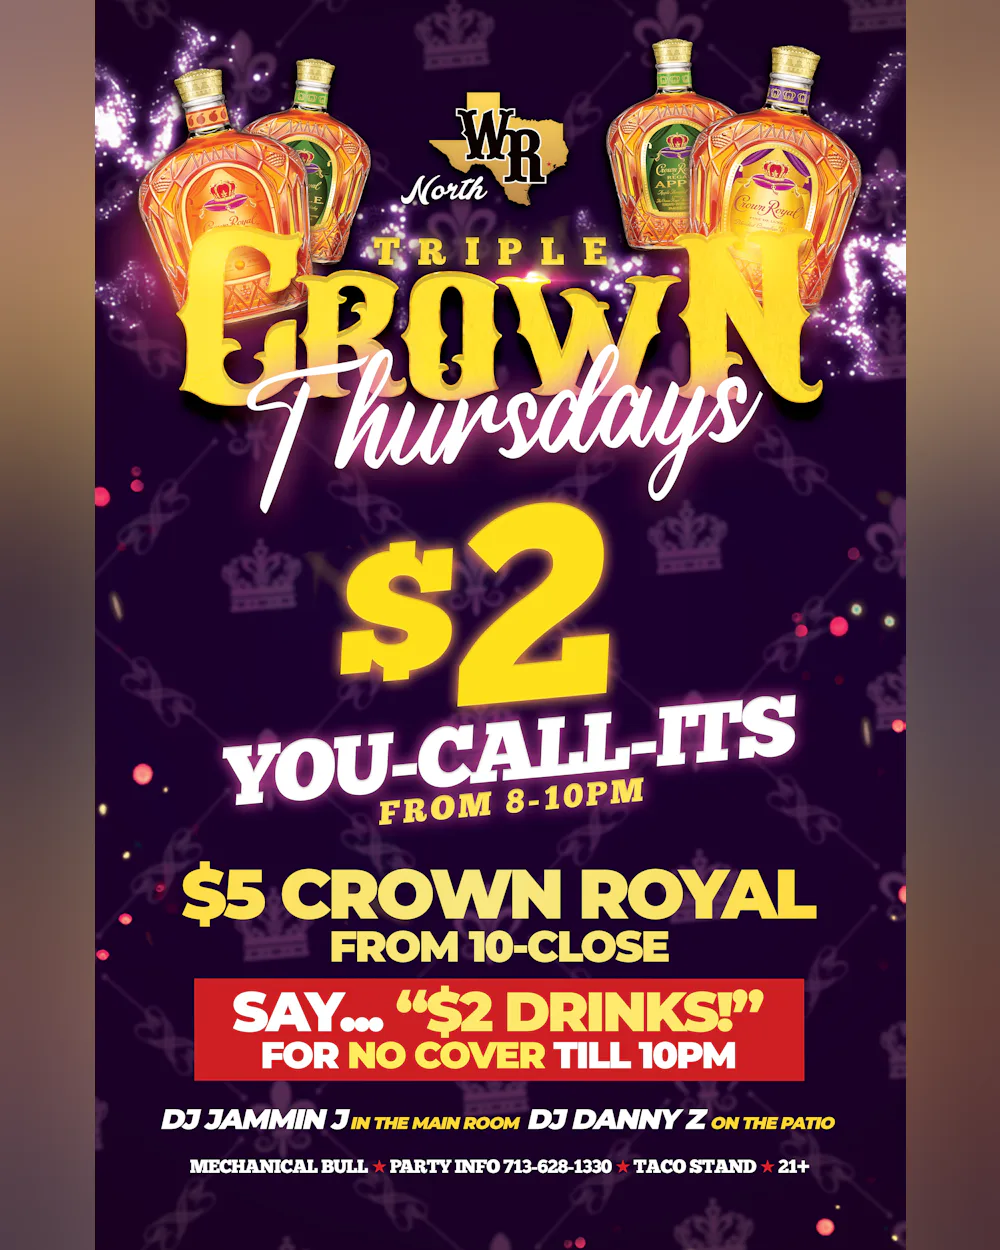 Thursday - Triple Crown Thursday